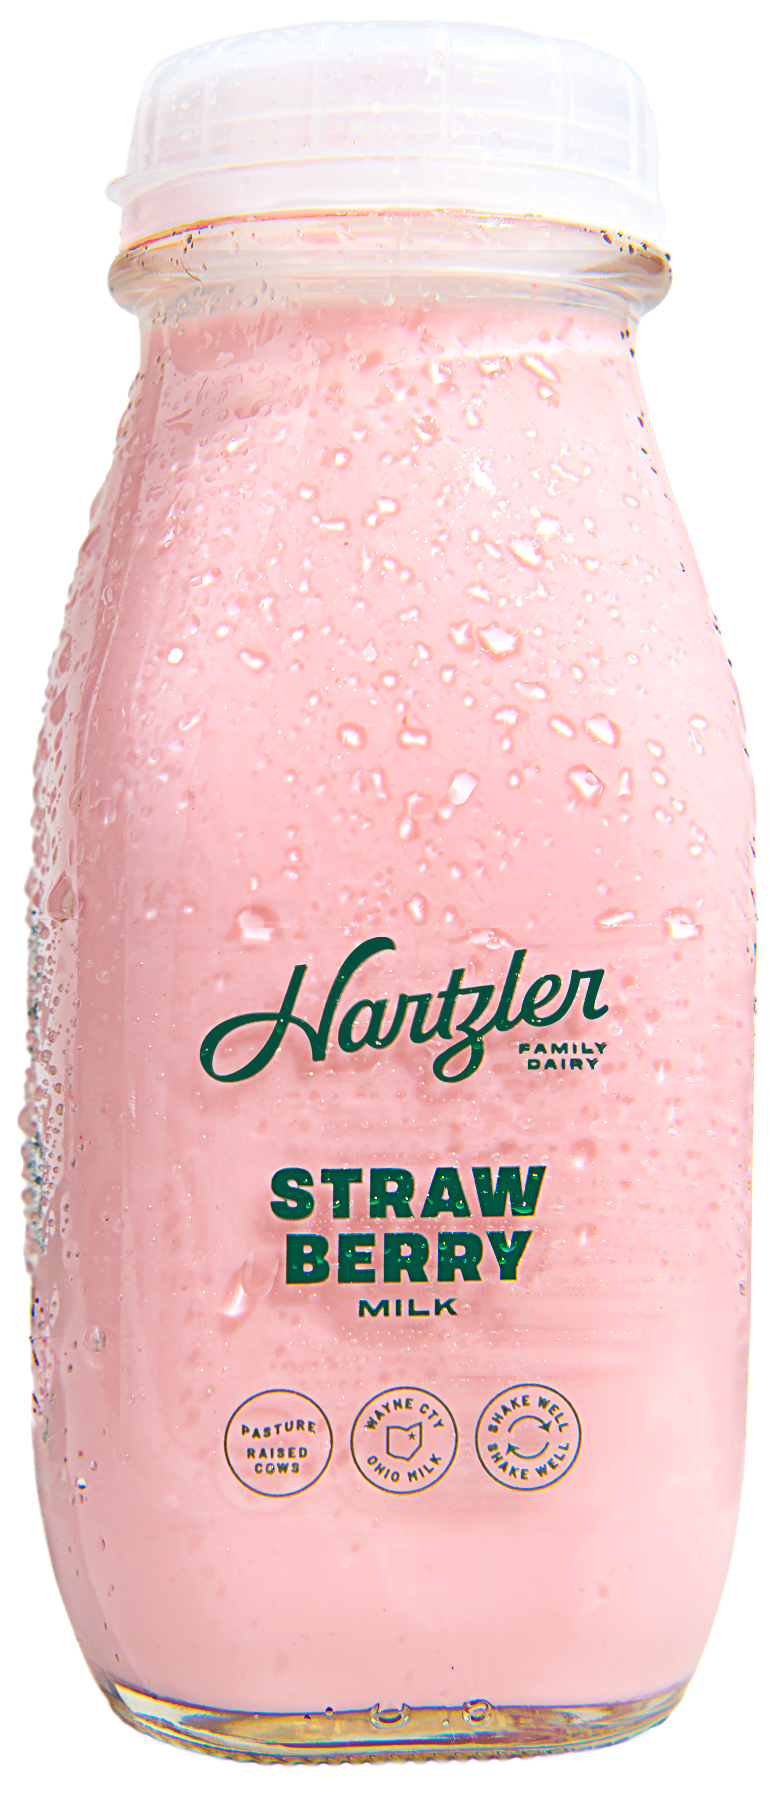 CC-Hartzler-Strawberry